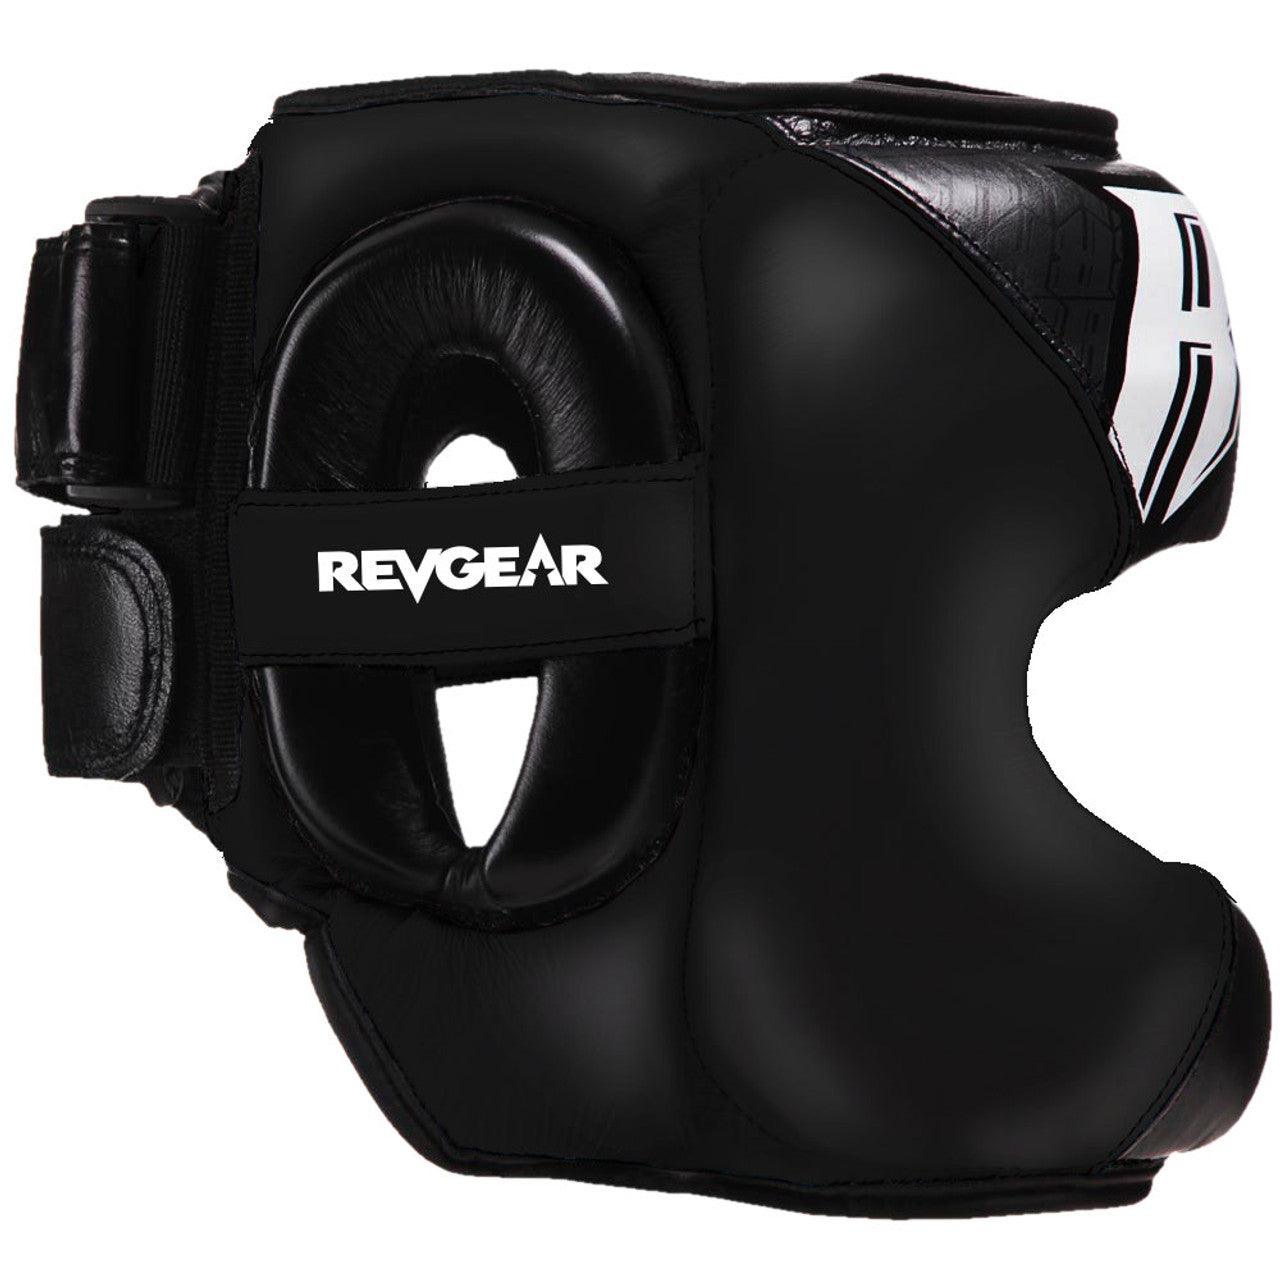 Revgear Guvnor Headgear - Black - Violent Art Shop